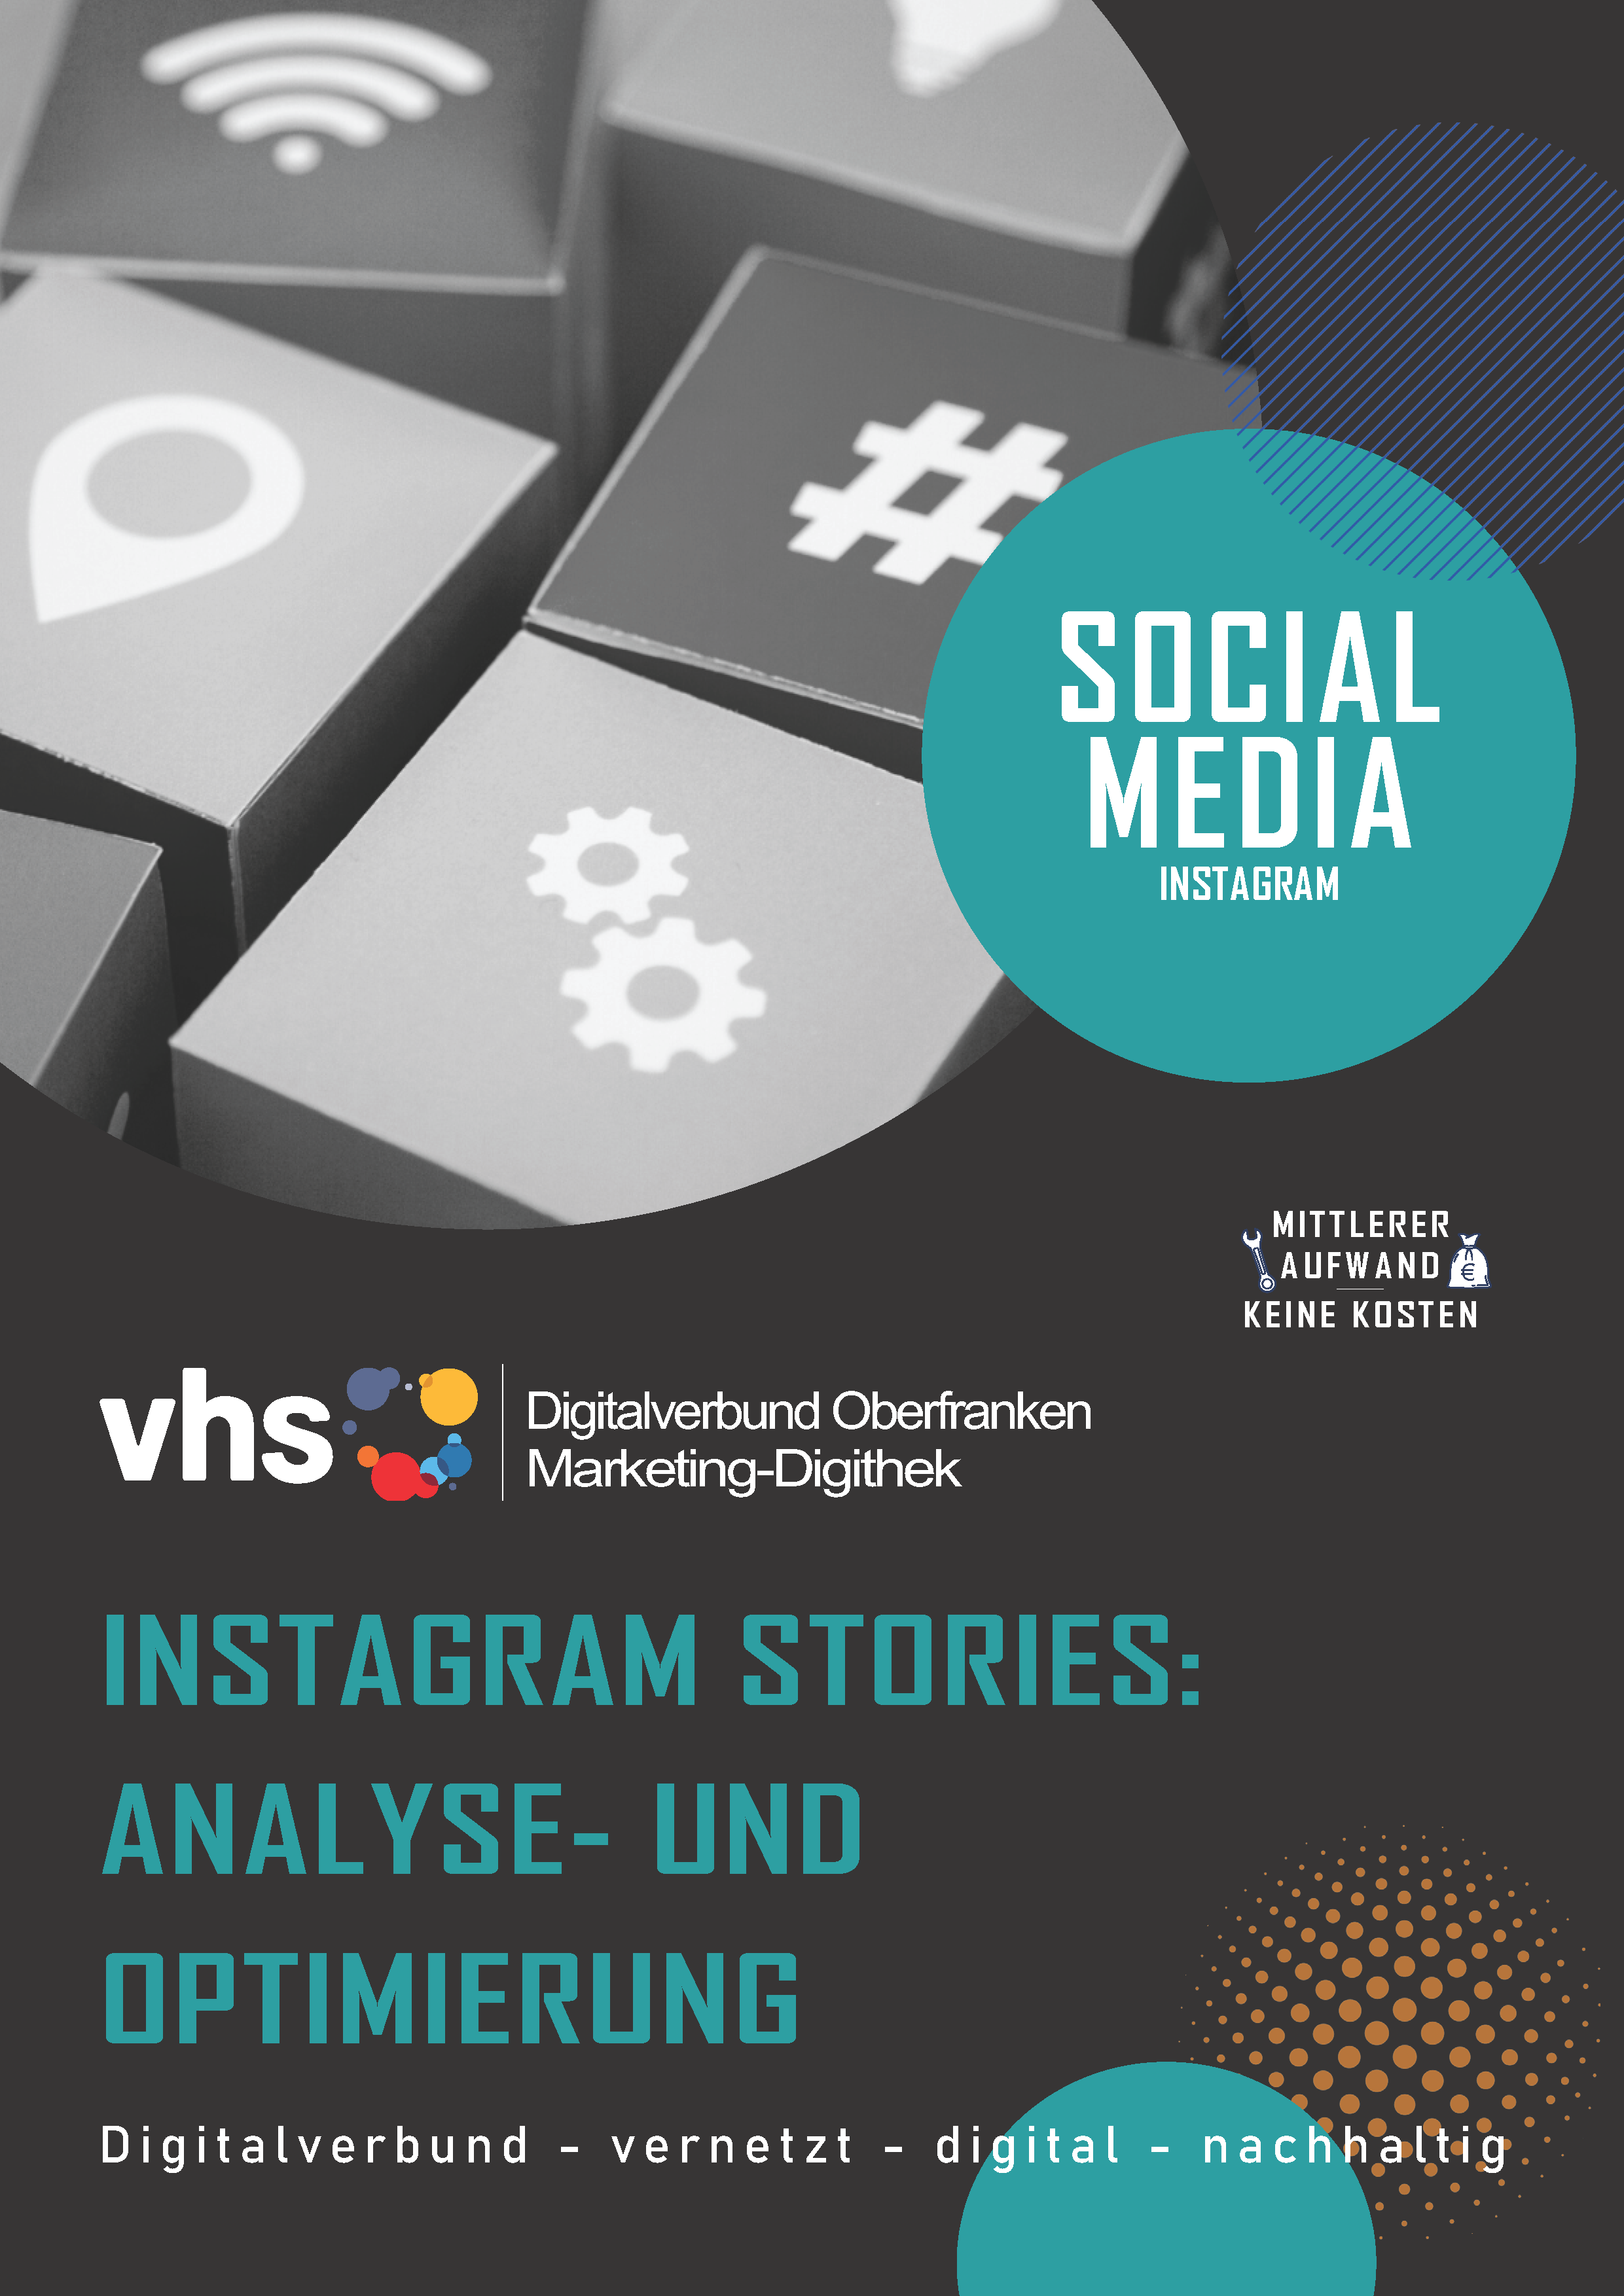 Deckblatt Marketing-Digithek: Instagram Analysetools Stories